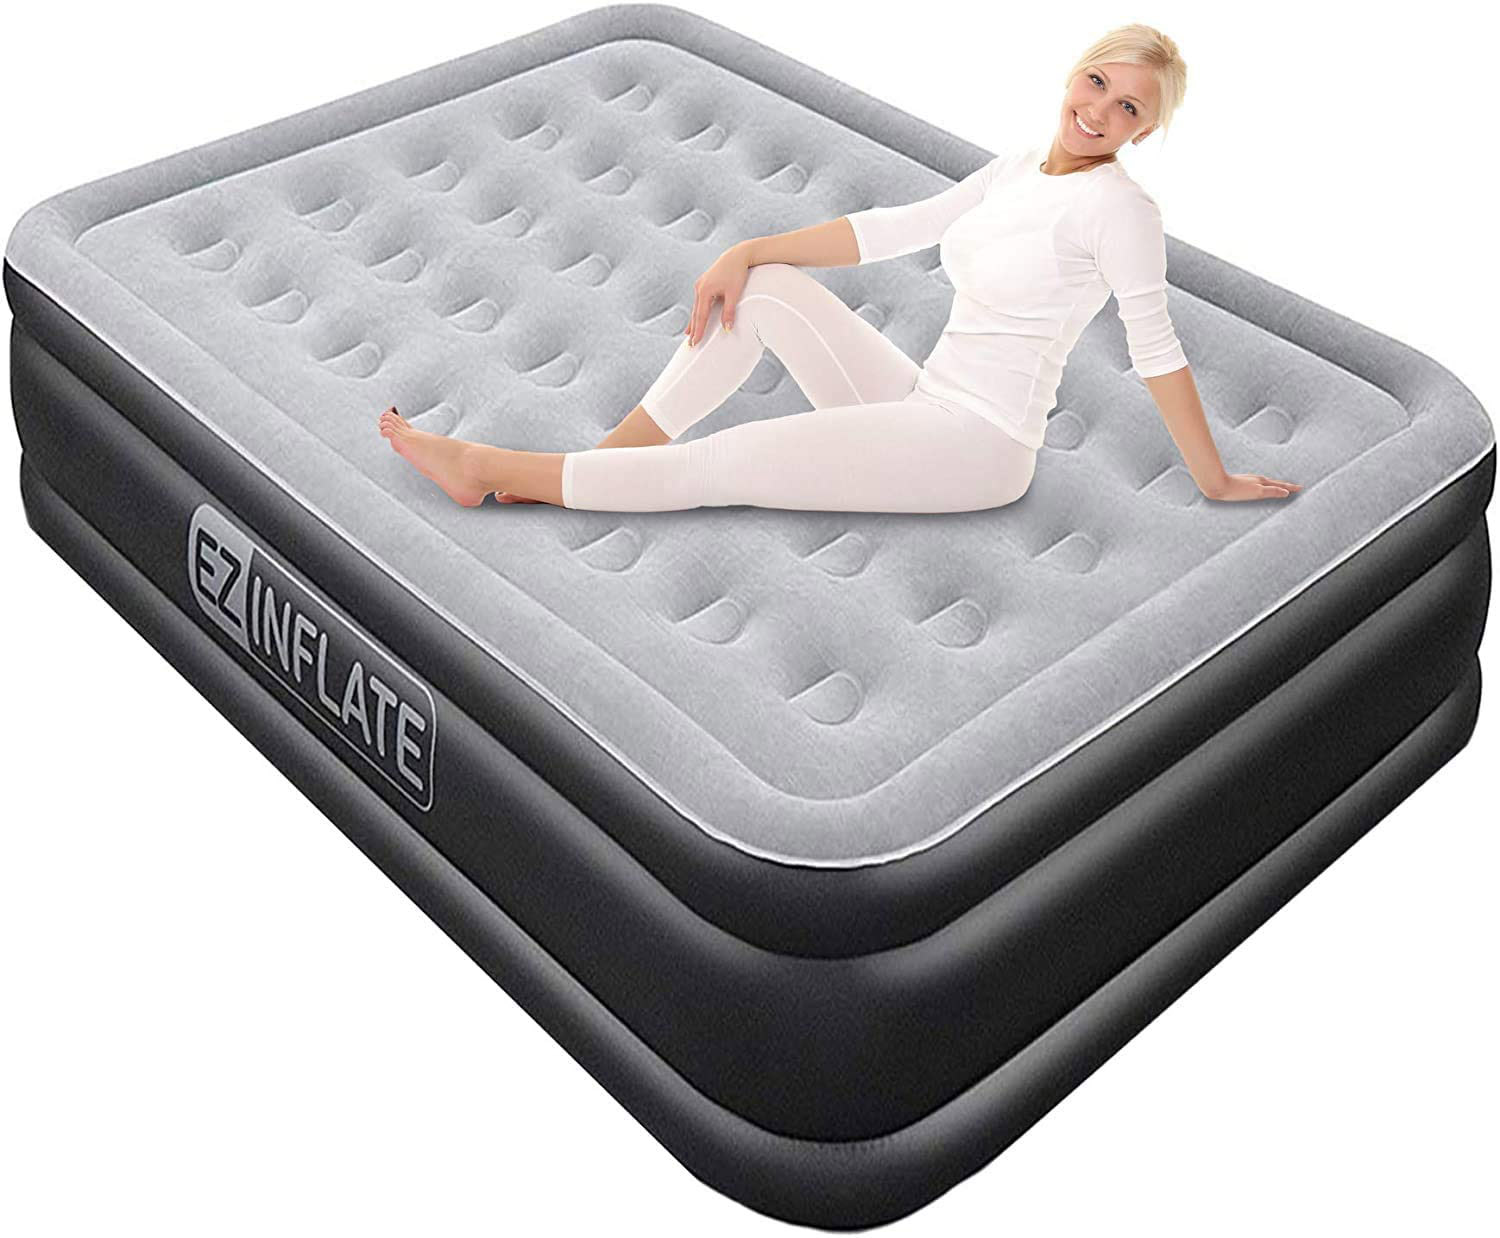 best double high air mattress for camping